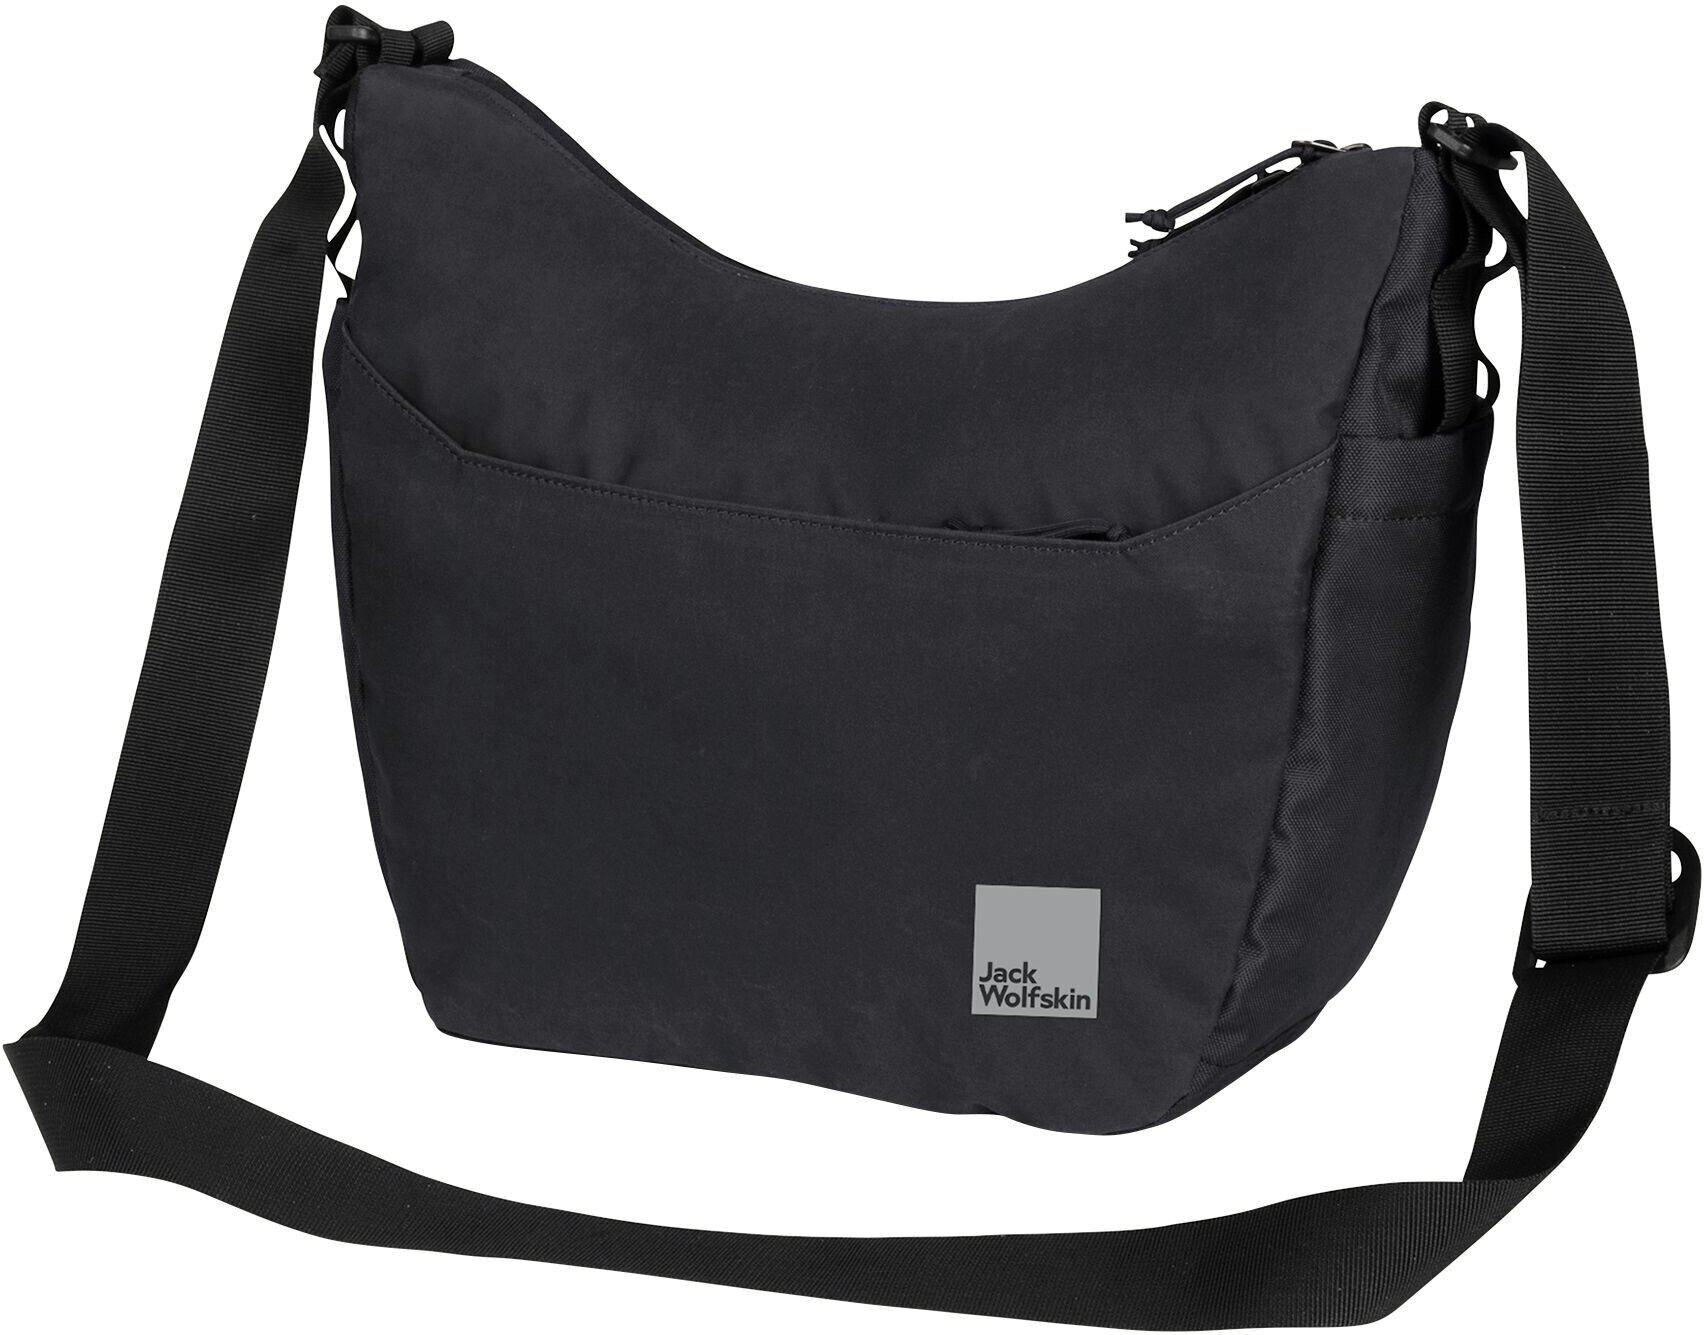 Lifestyle Backpack / Bag Jack Wolfskin Burgweg Black Backpack